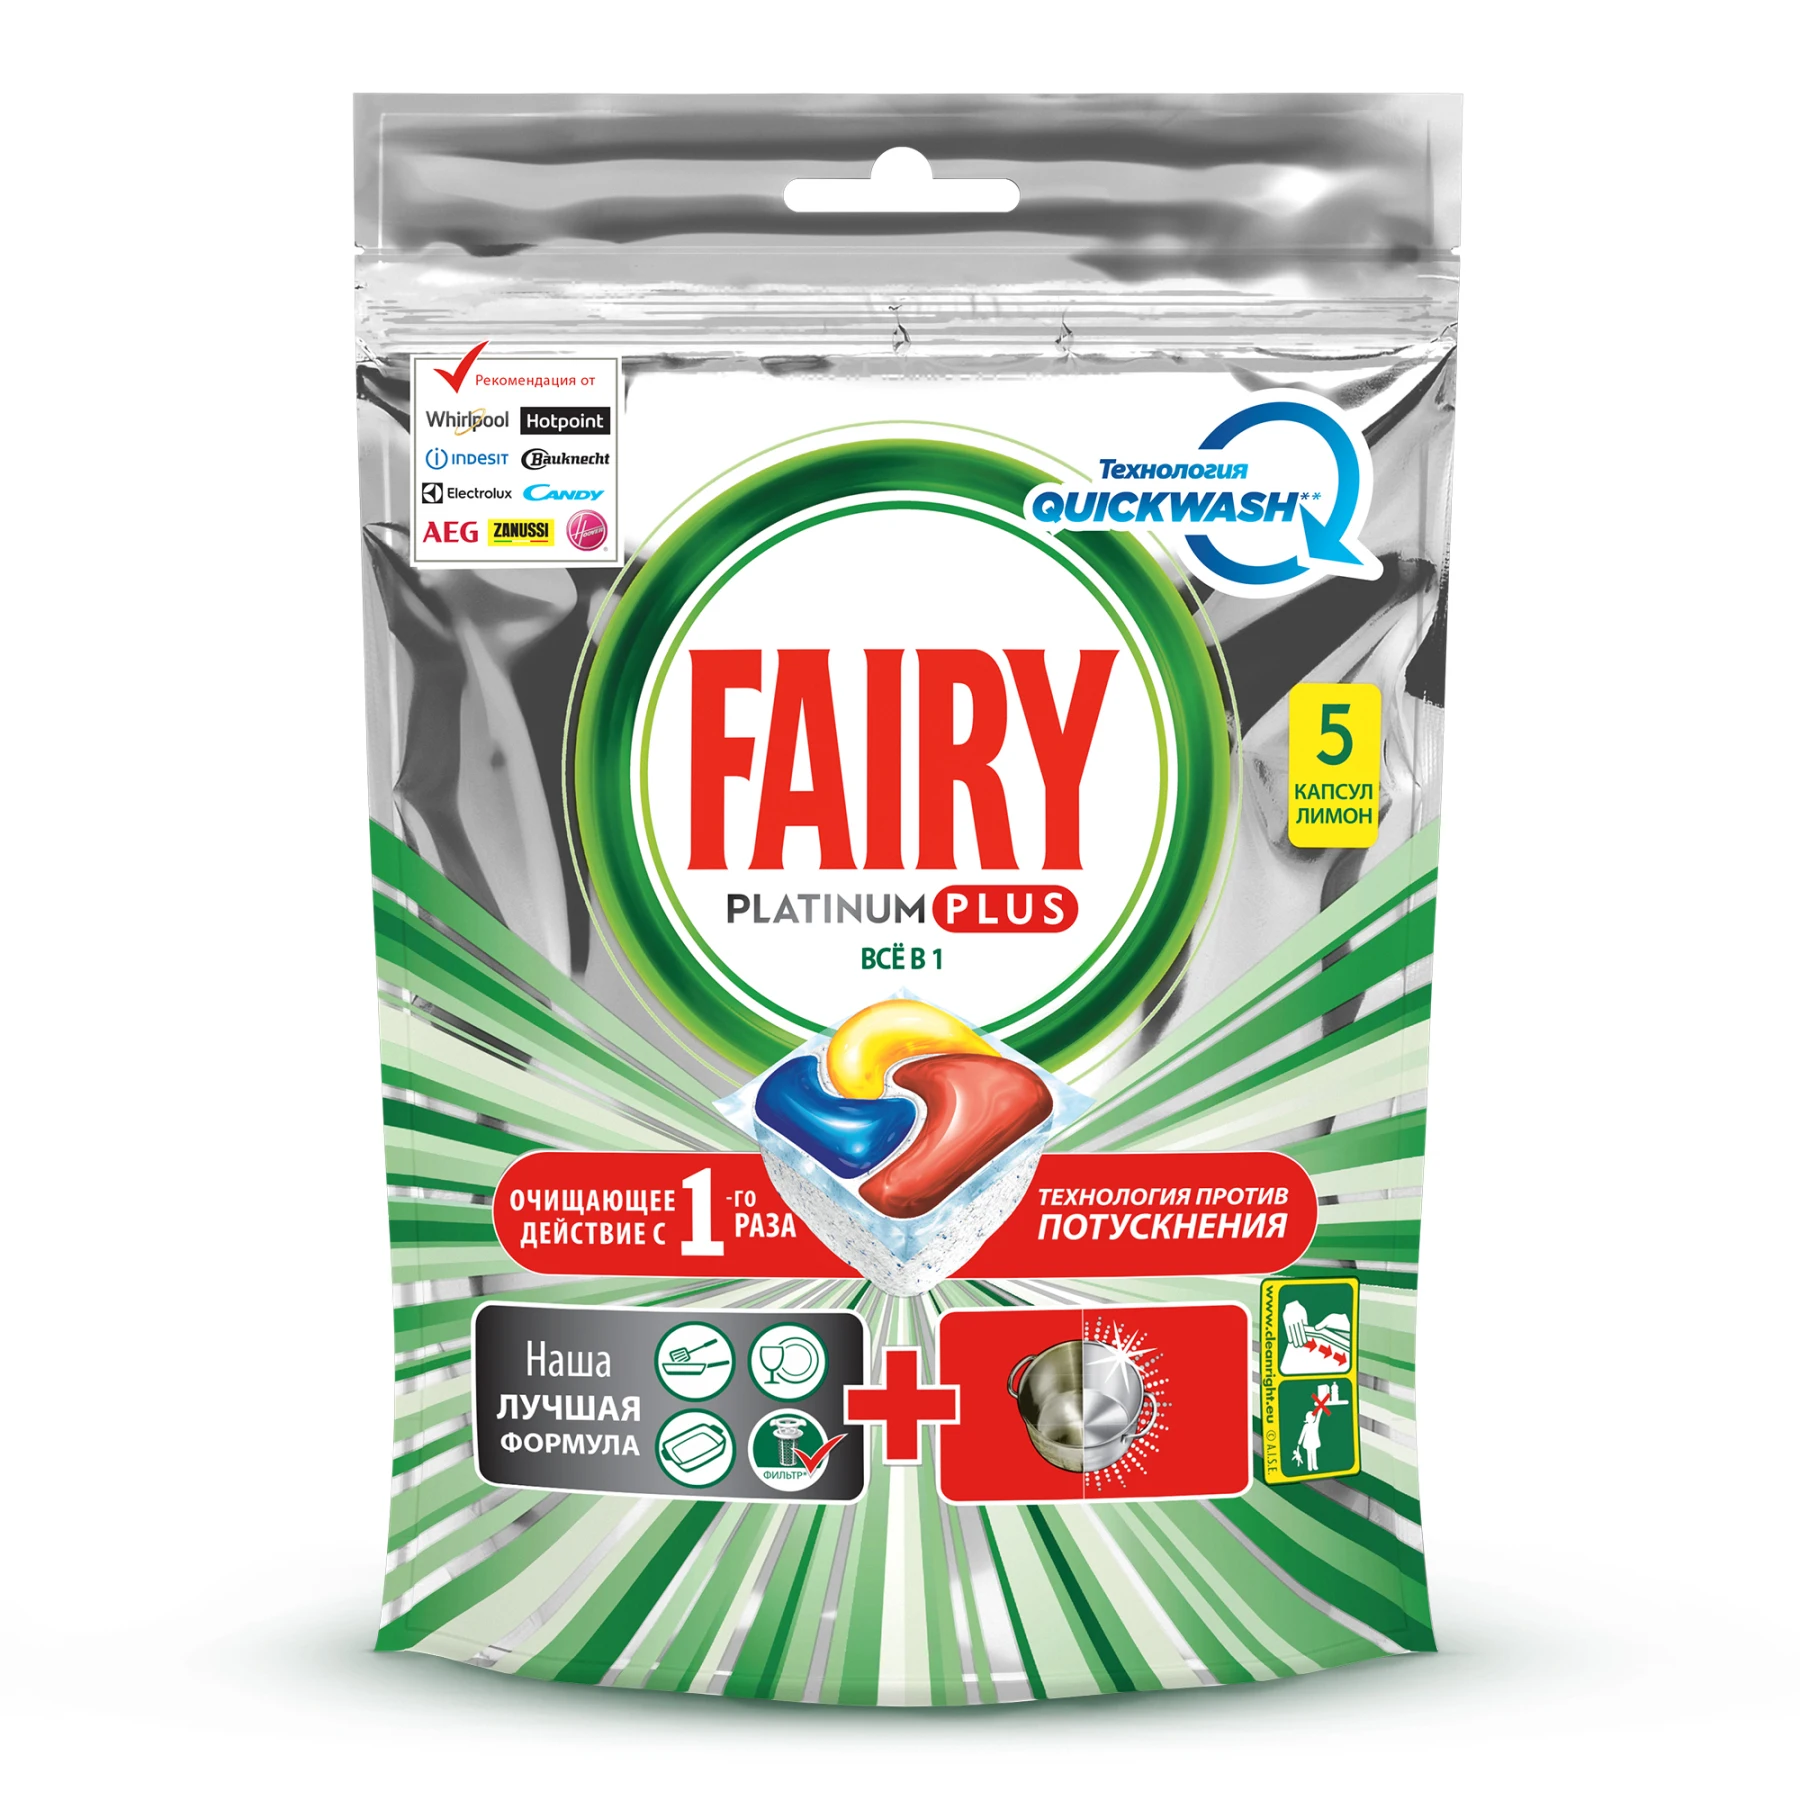 Fairy Platinum Plus Lemon Dishwasher Tablets/ capules X 5 Trial/ Tester Pack 